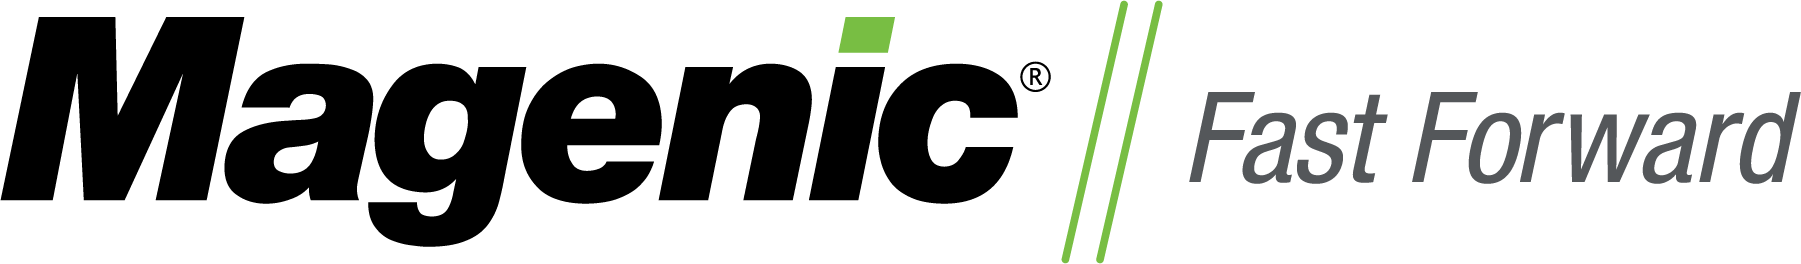 Magenic Technologies logo